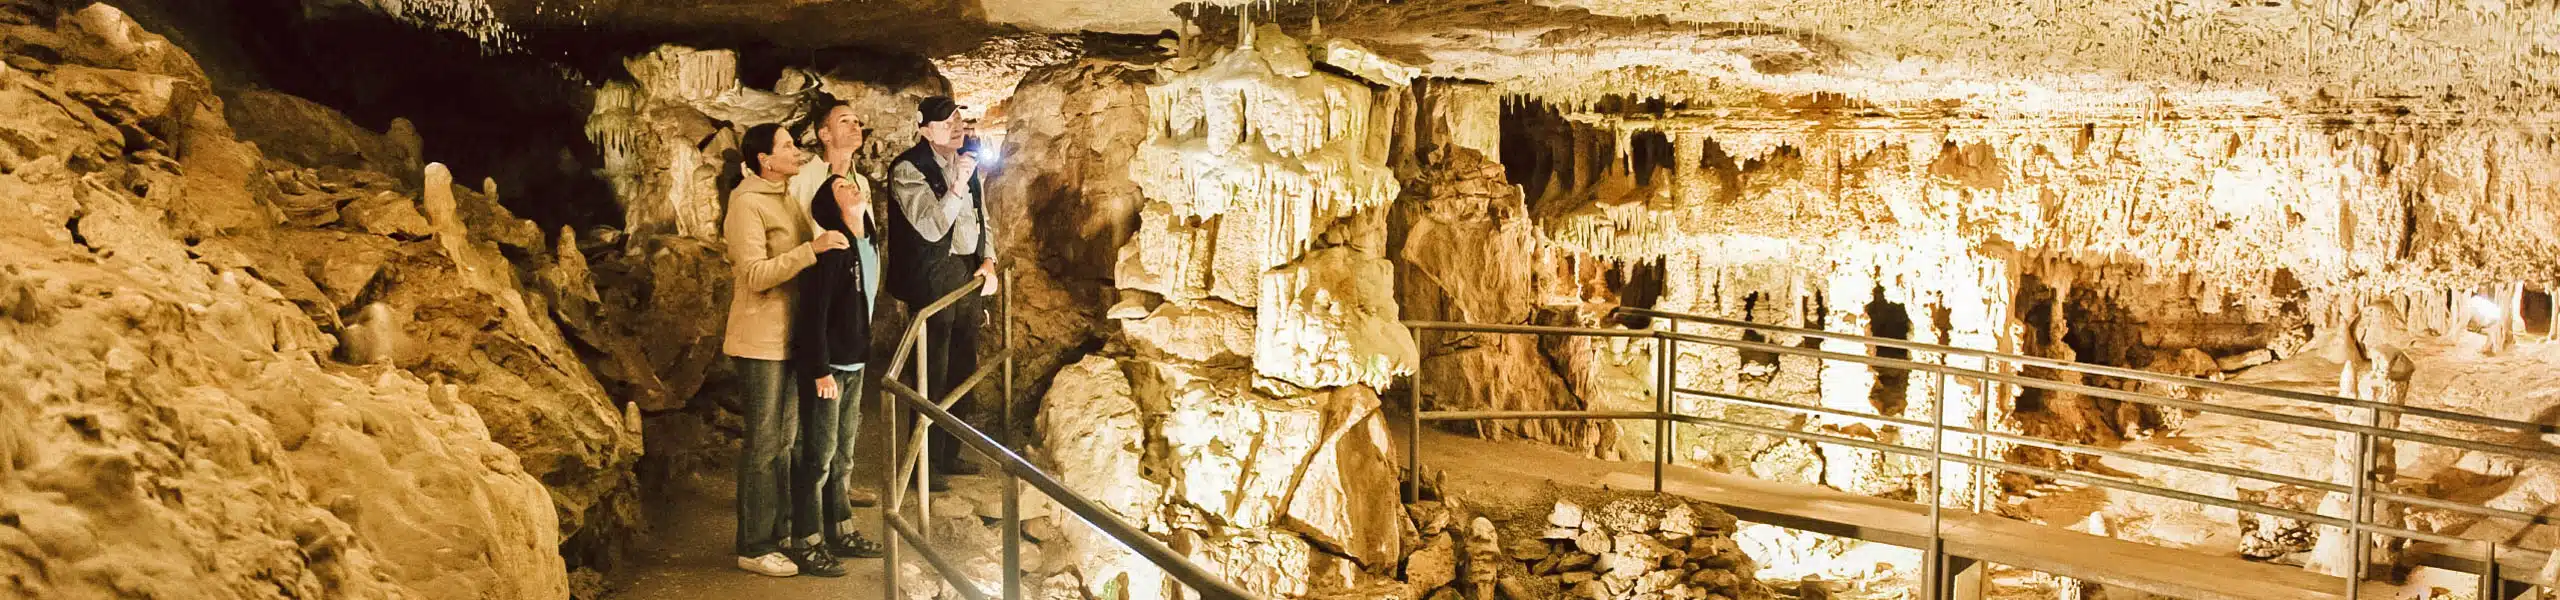 Tropfsteinhöhle Velburg